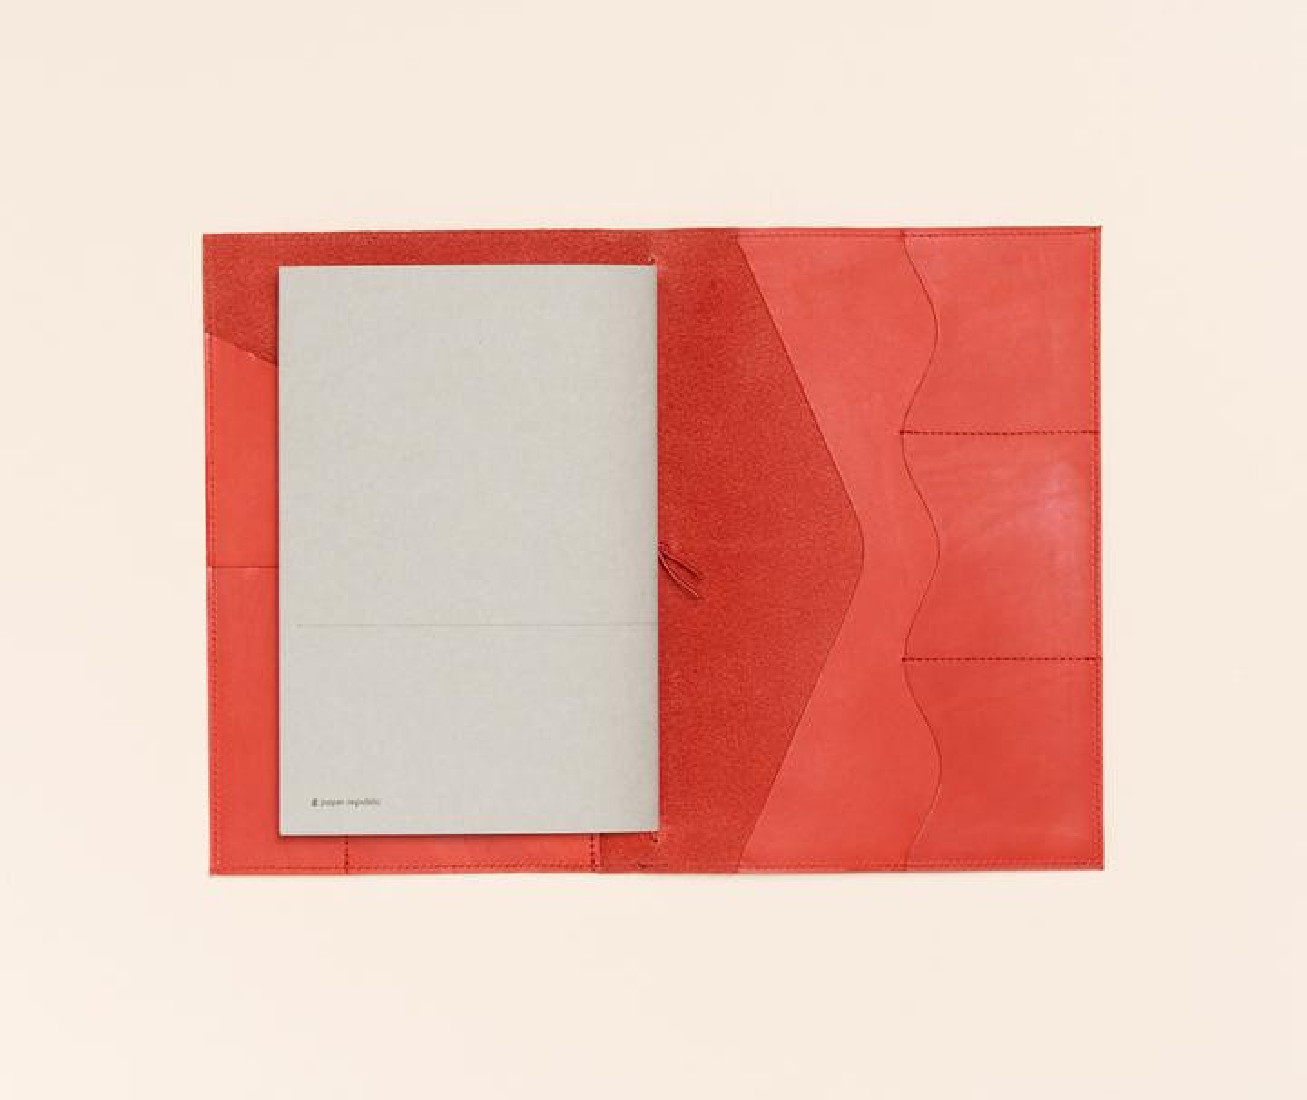 Paper Republic A5 Leather Portfolio Red